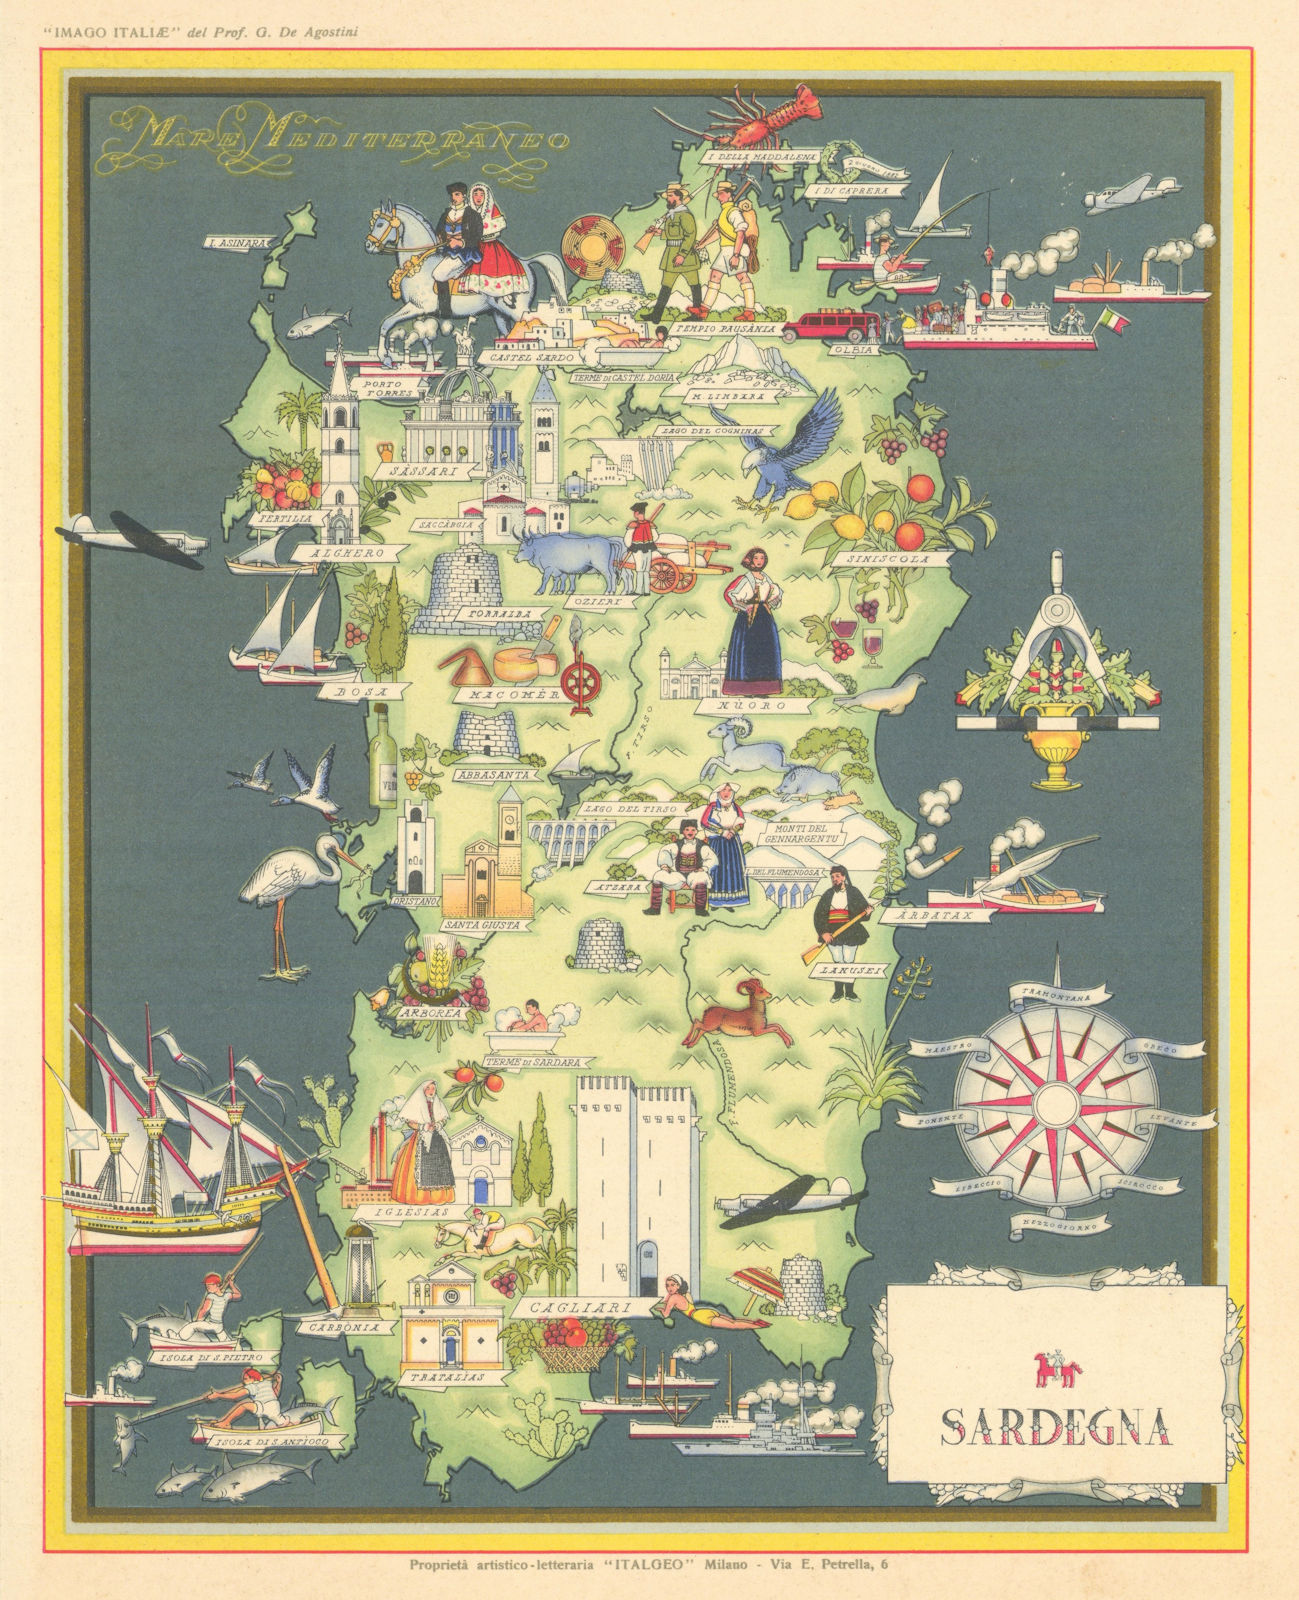 Sardegna / Sardinia pictorial map by Vsevolode Nicouline. Italgeo/Agostini c1950